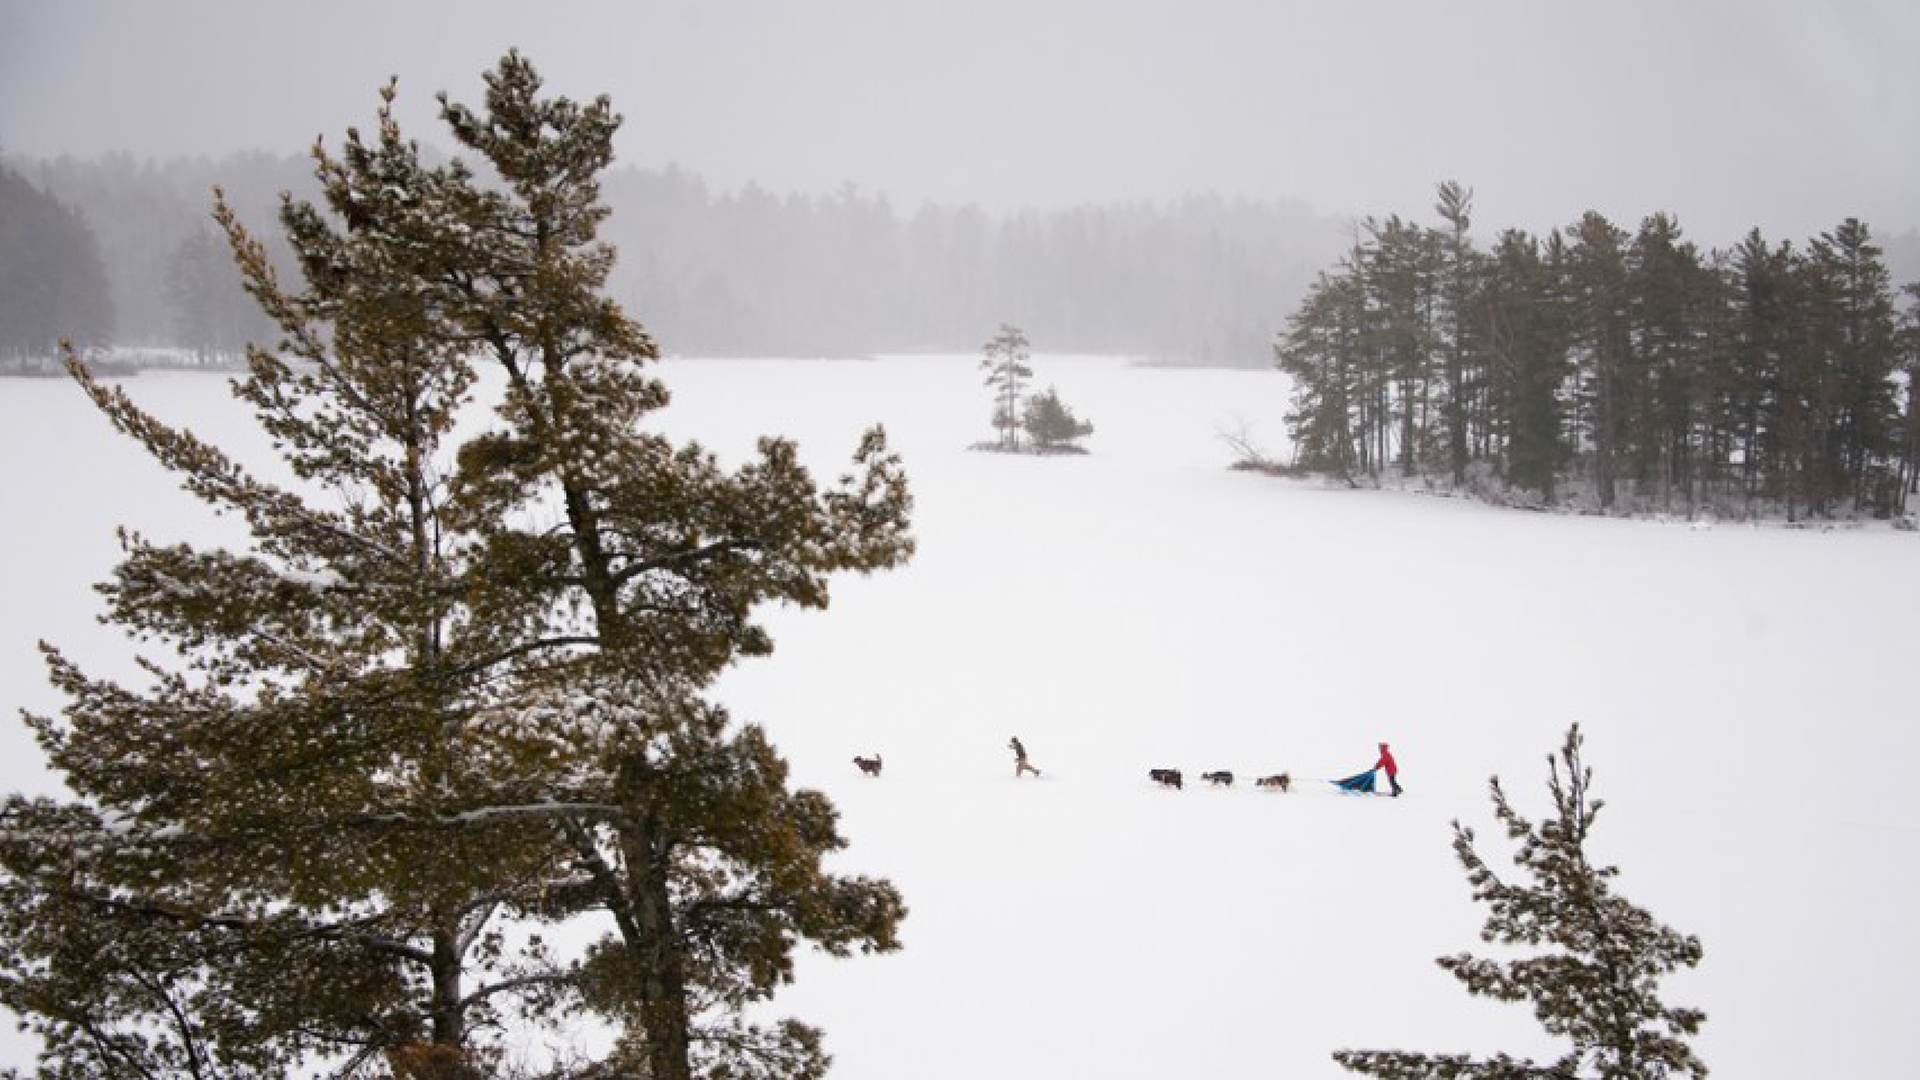 Shooting Winter Landscapes